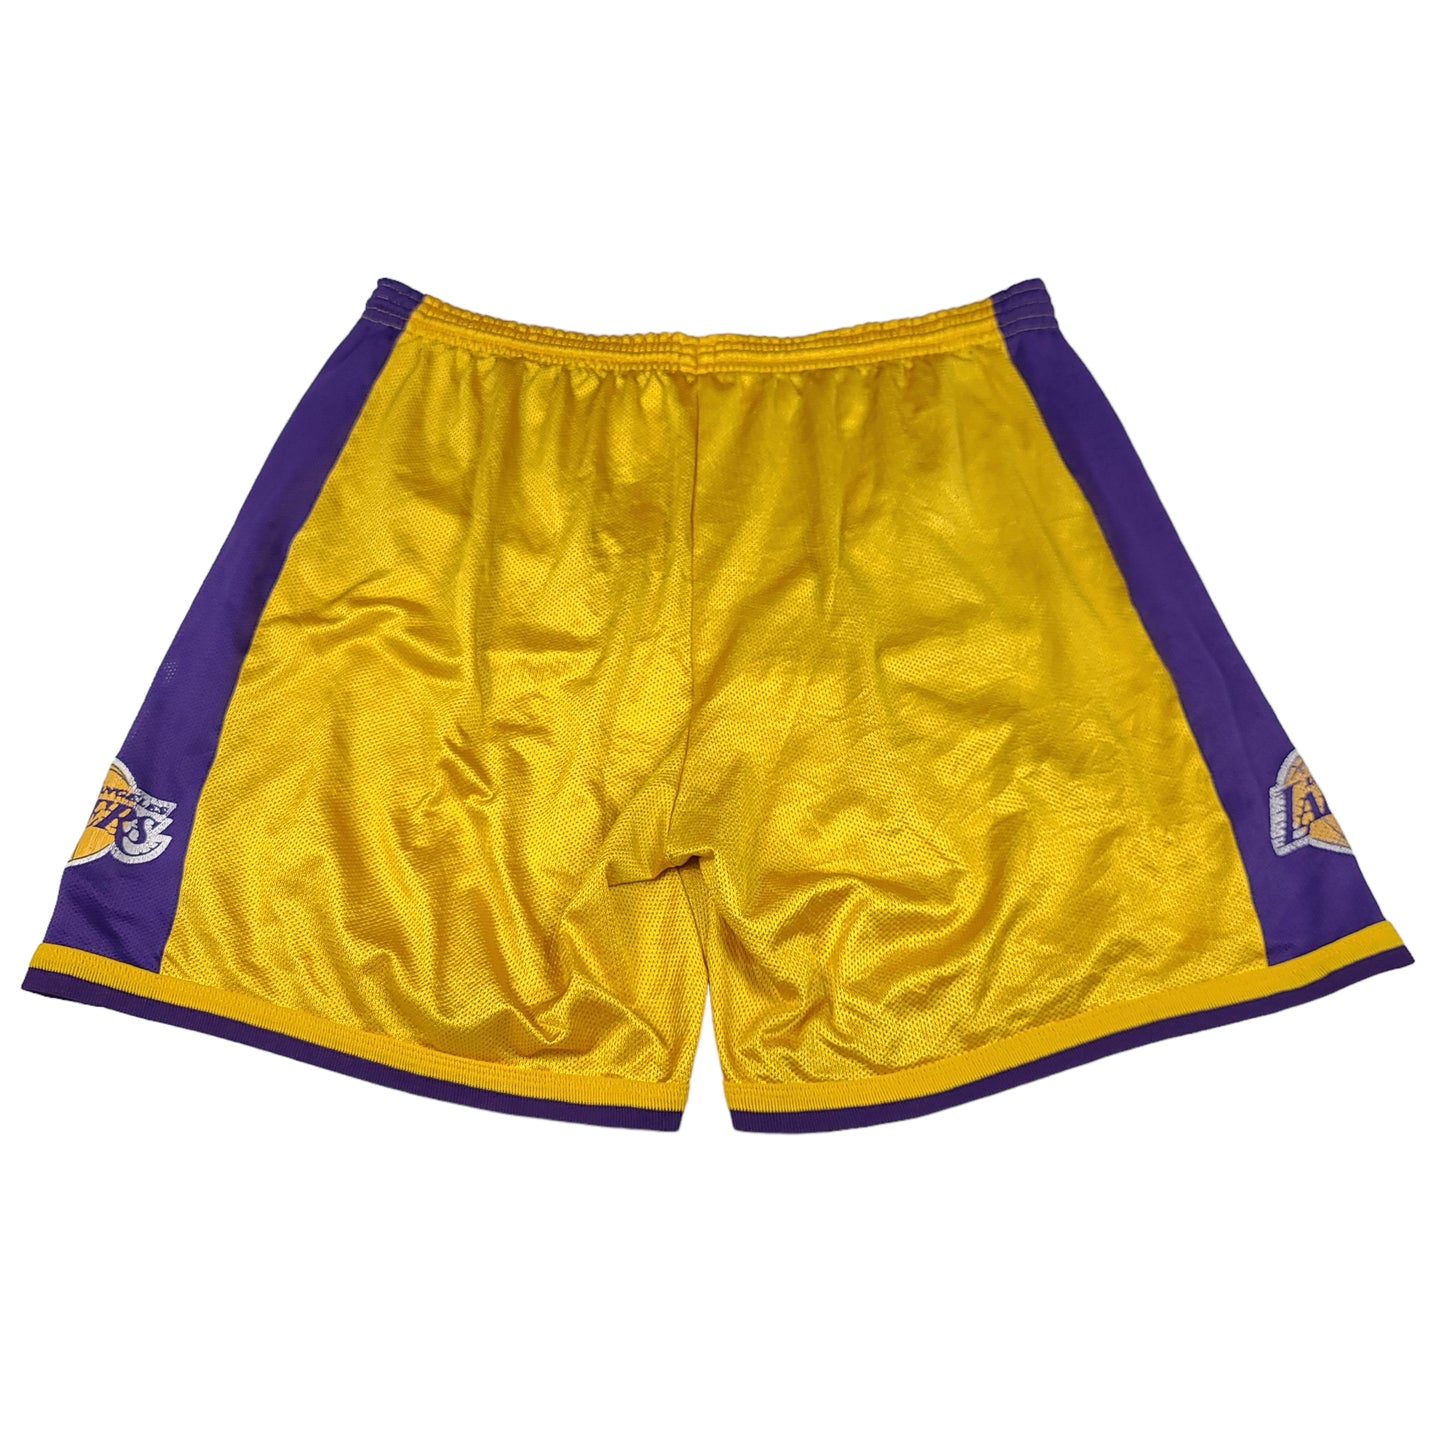 Vintage Los Angeles Lakers Gold & Purple Champion Basketball Shorts